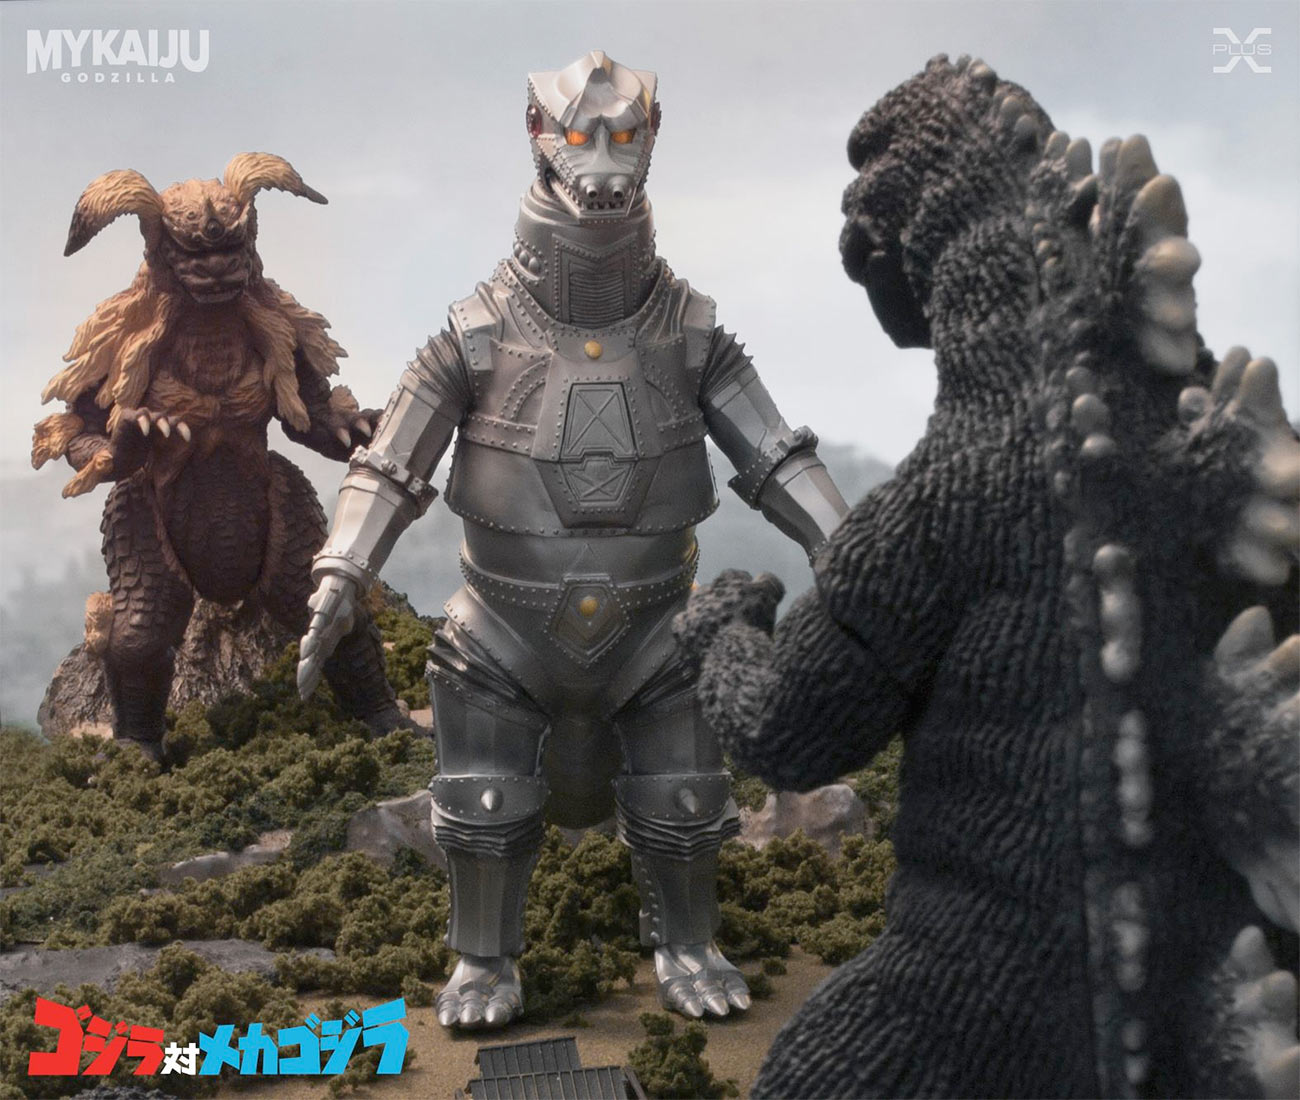 Godzilla Vs. Mechagodzilla #6